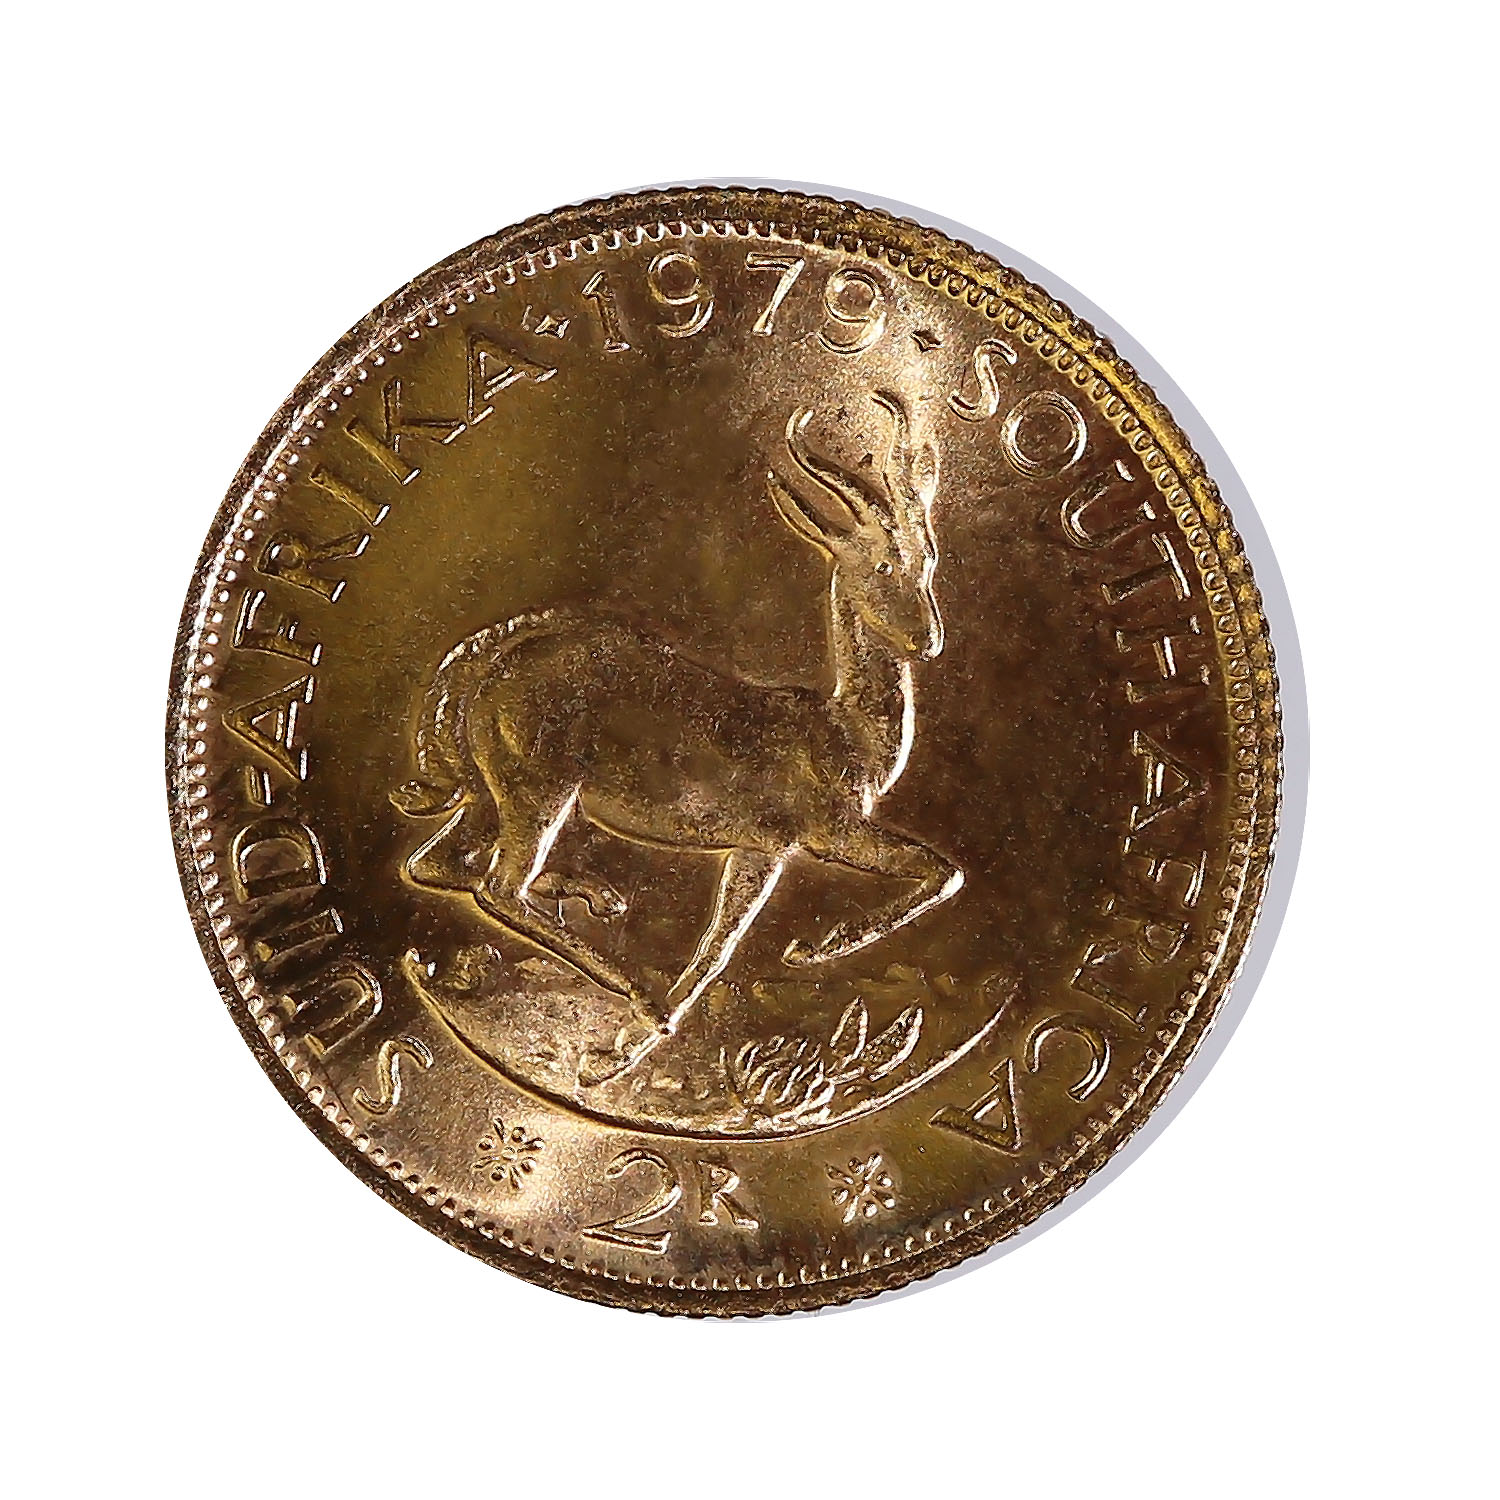 South Africa 2 Rand Gold 1961-1983 BU